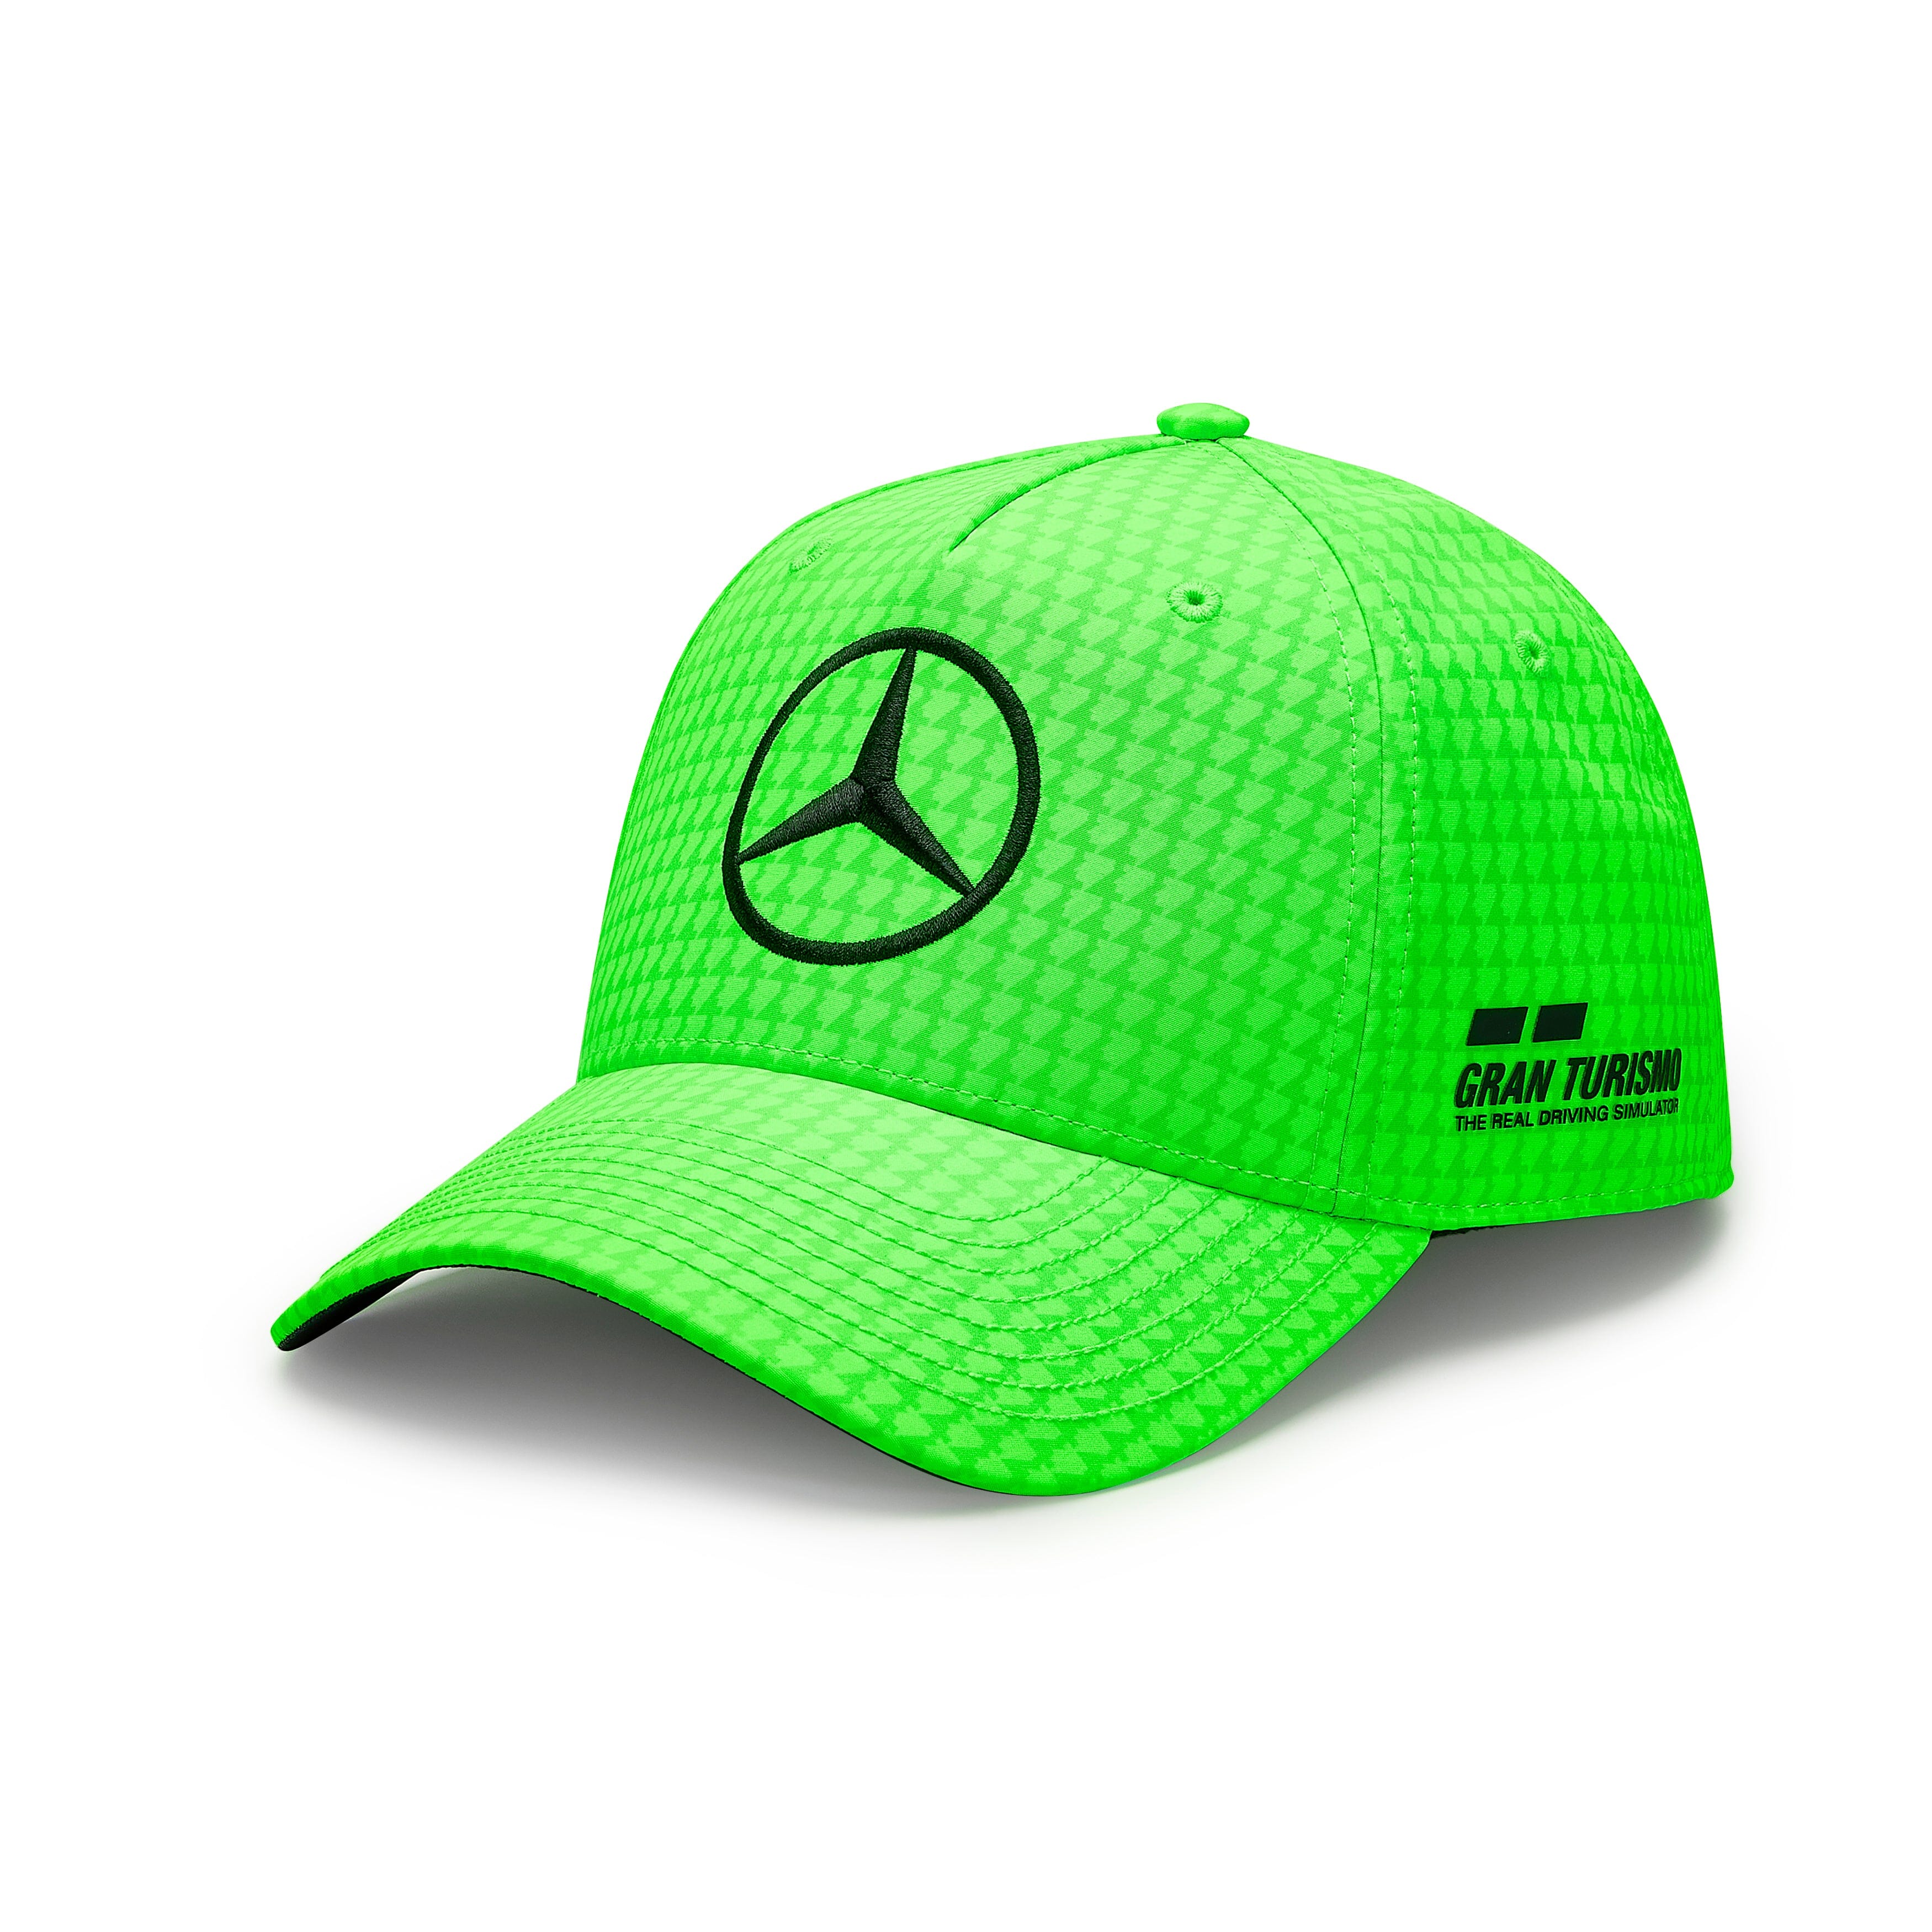 Mercedes AMG F1 Special Edition Lewis Hamilton Silverstone GP Hat- Green